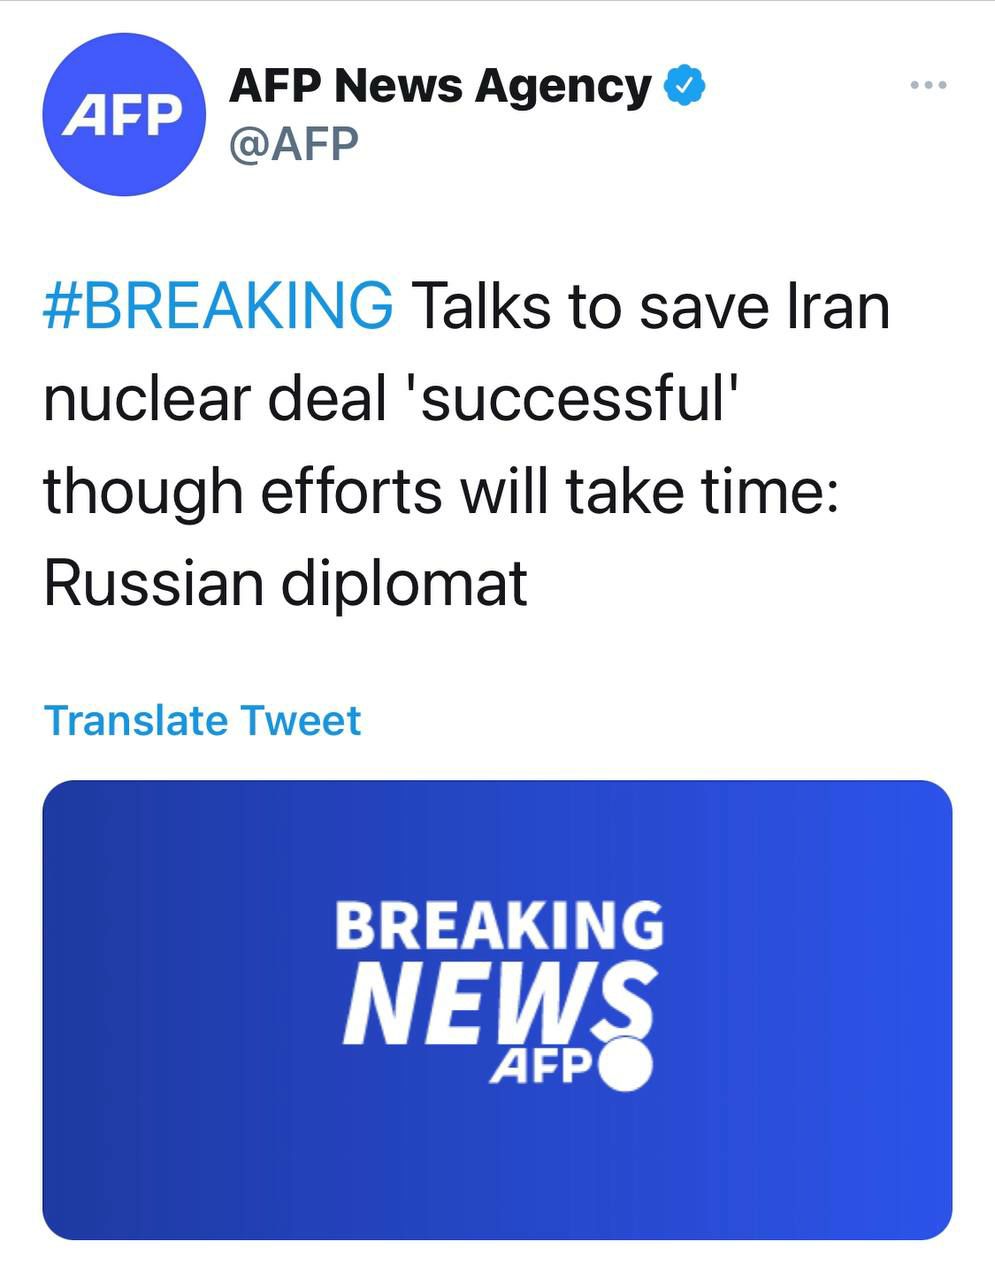 ️دیپلمات روس: گفتگوها برای نجات توافق هسته‌ای با ایران “موفقیت آمیز” است، هرچند تلاش ها به طول خواهد انجامید.